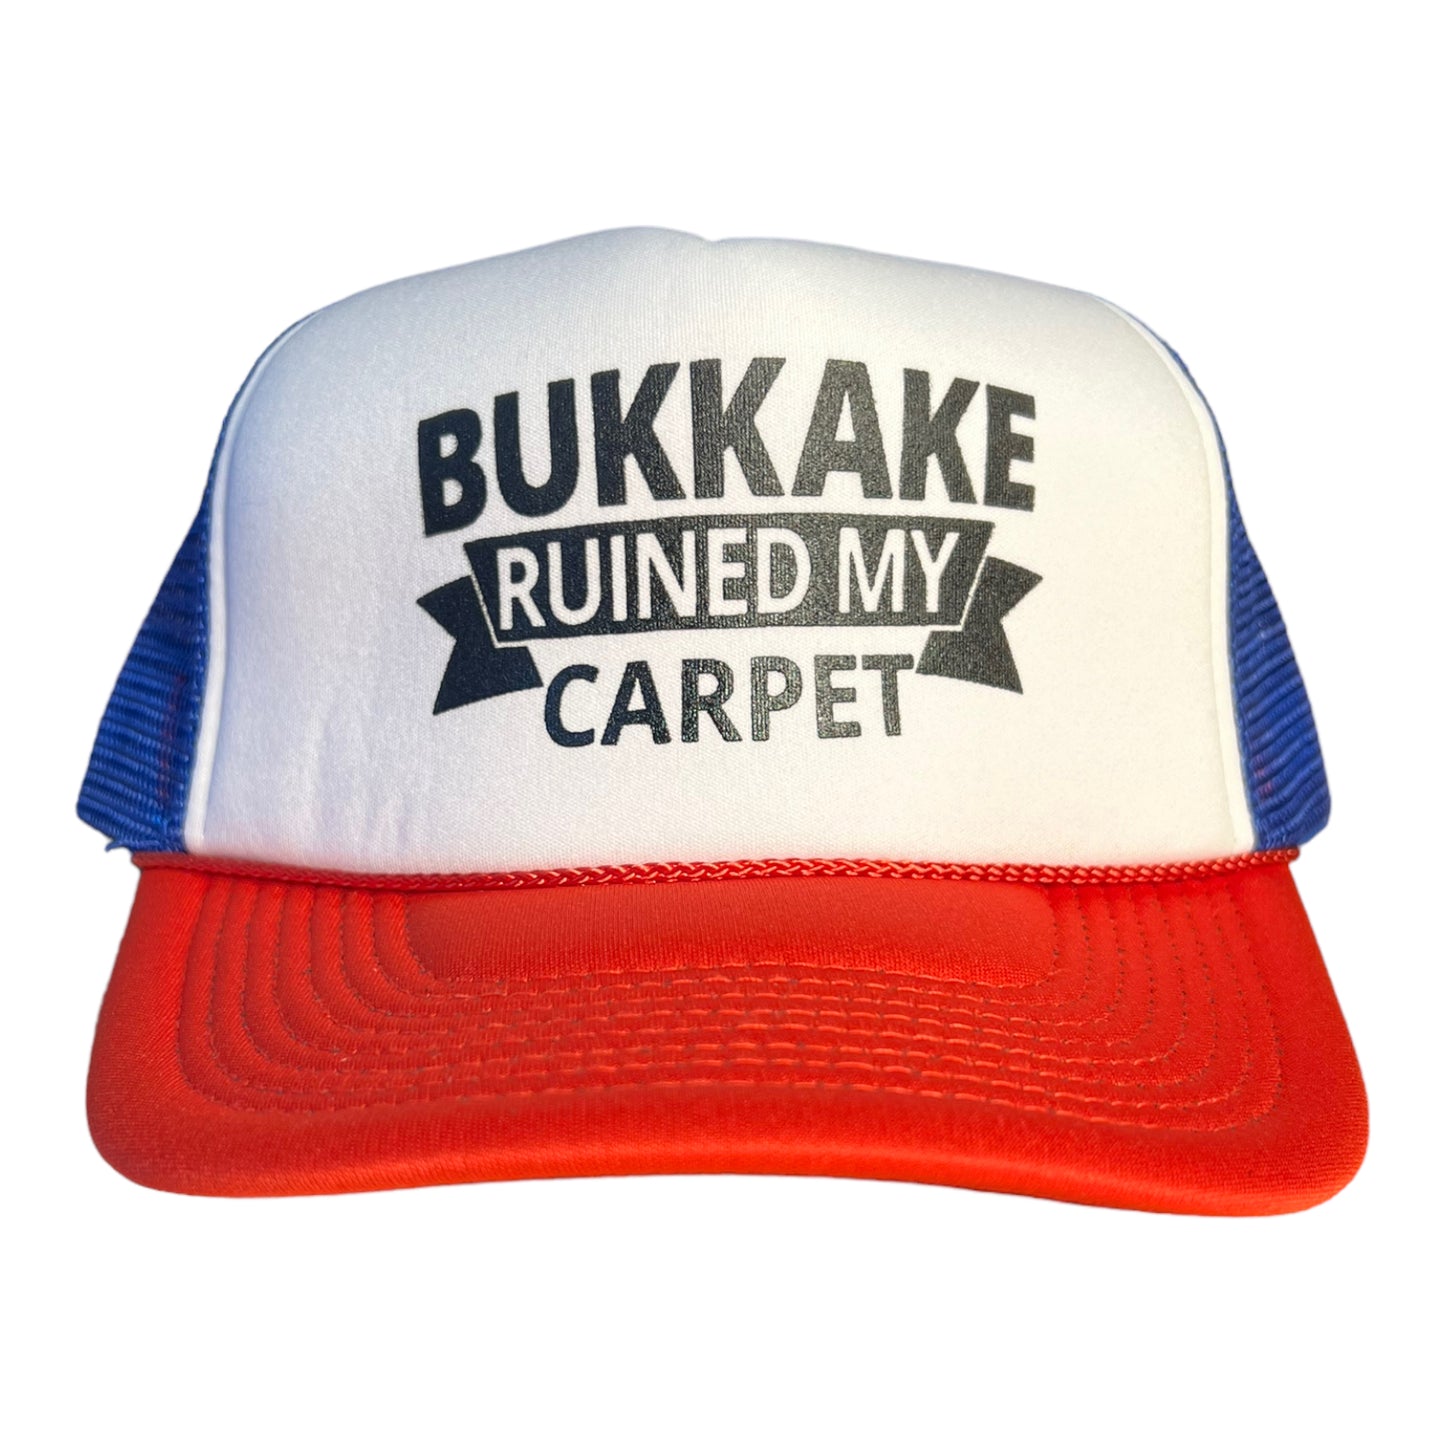 Bukkake Ruined My Carpet Trucker Hat Funny Trucker Hat Red/White/Blue